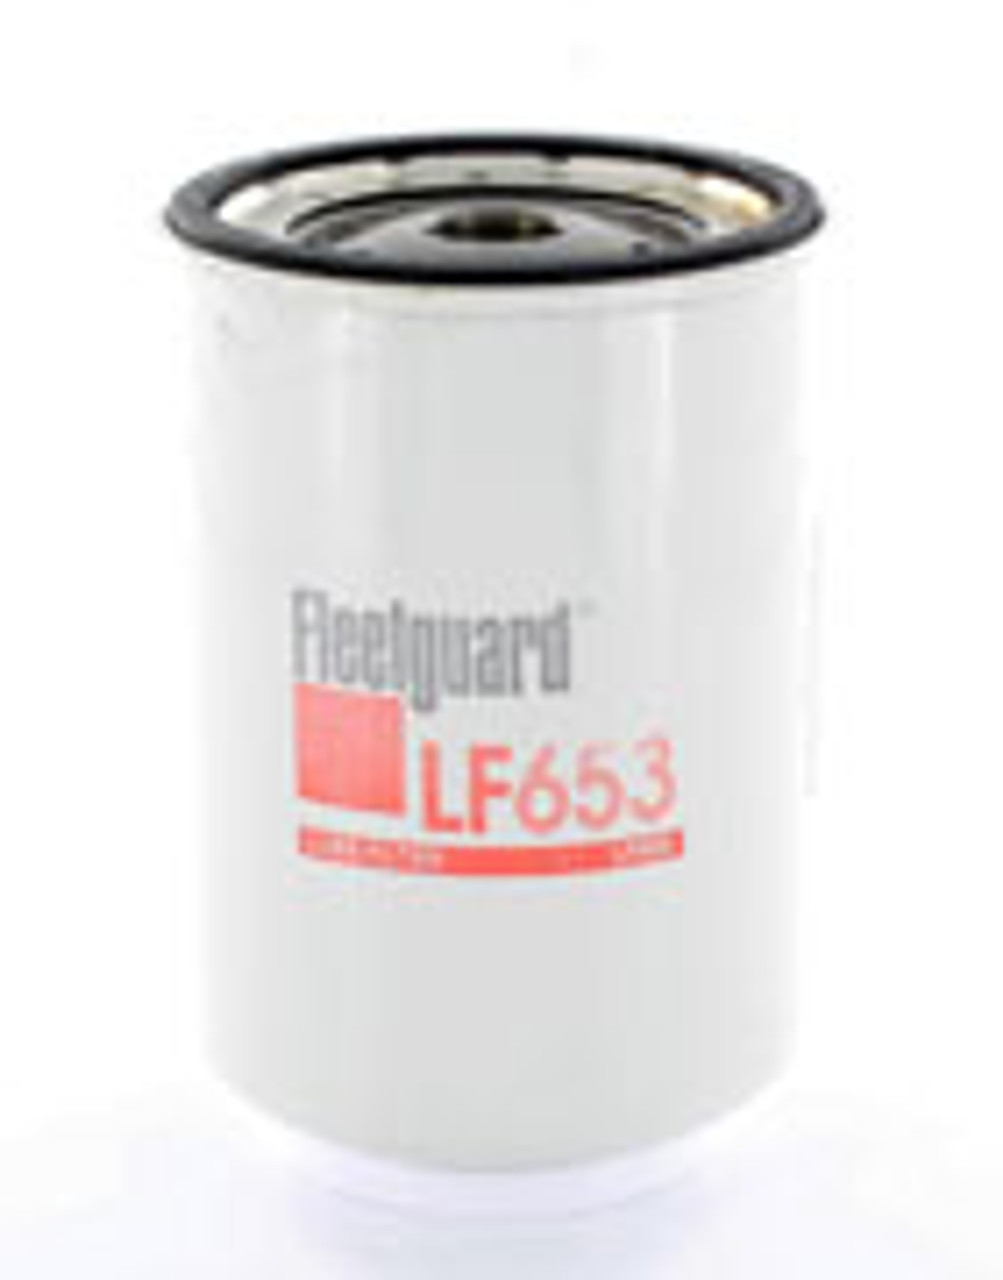 LF653: Fleetguard Full-Flow Spin-On Oil Filter